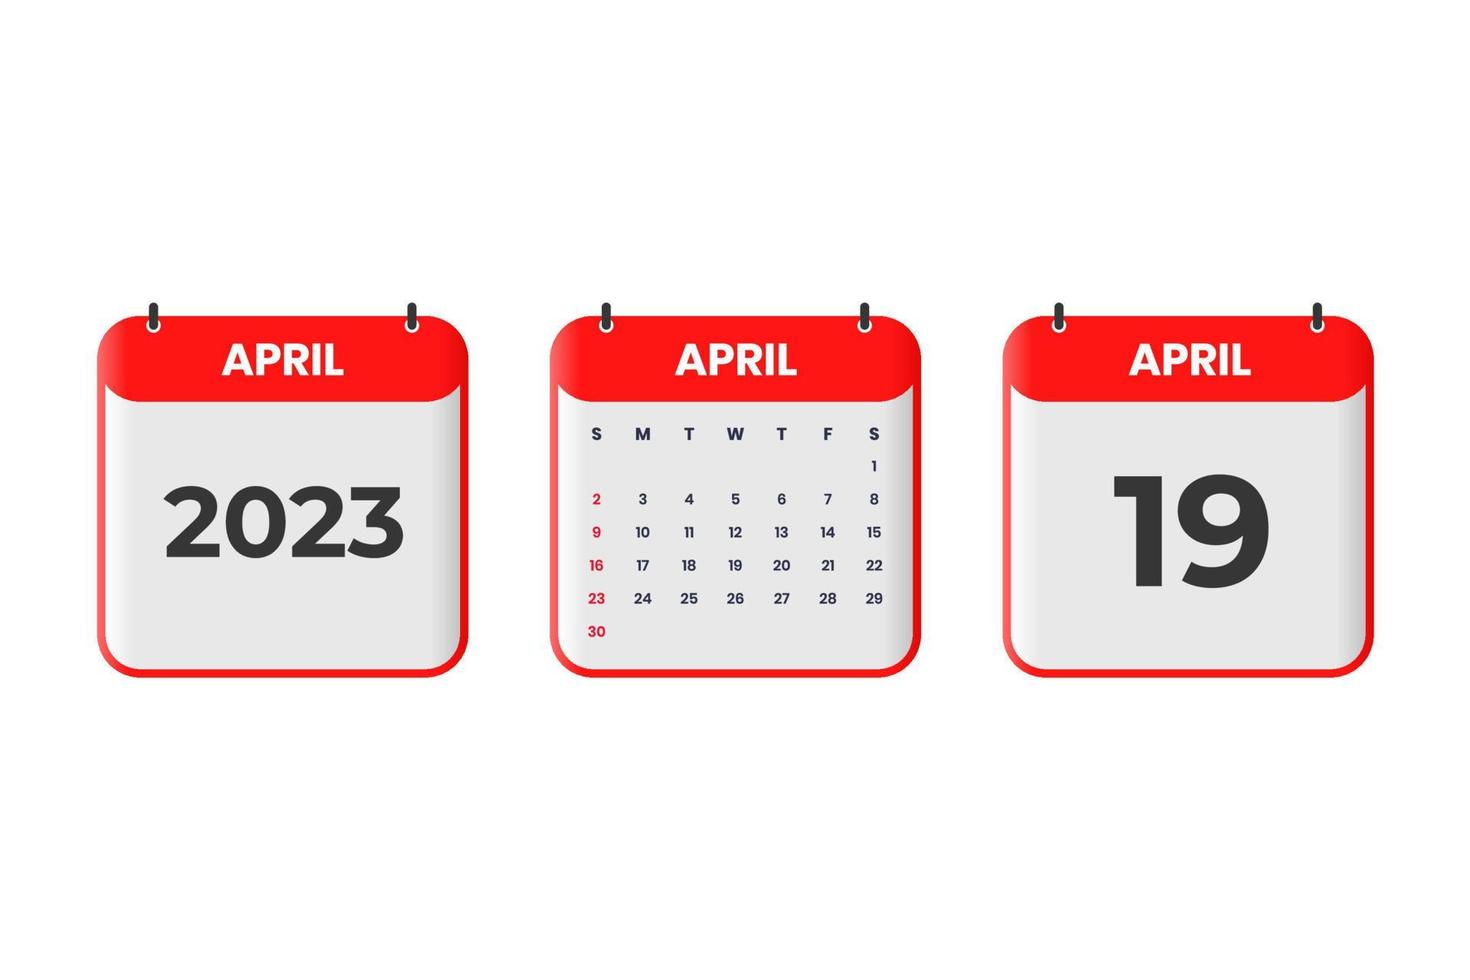 April 2023 calendar design. 19th April 2023 calendar icon for schedule, appointment, important date concept vector